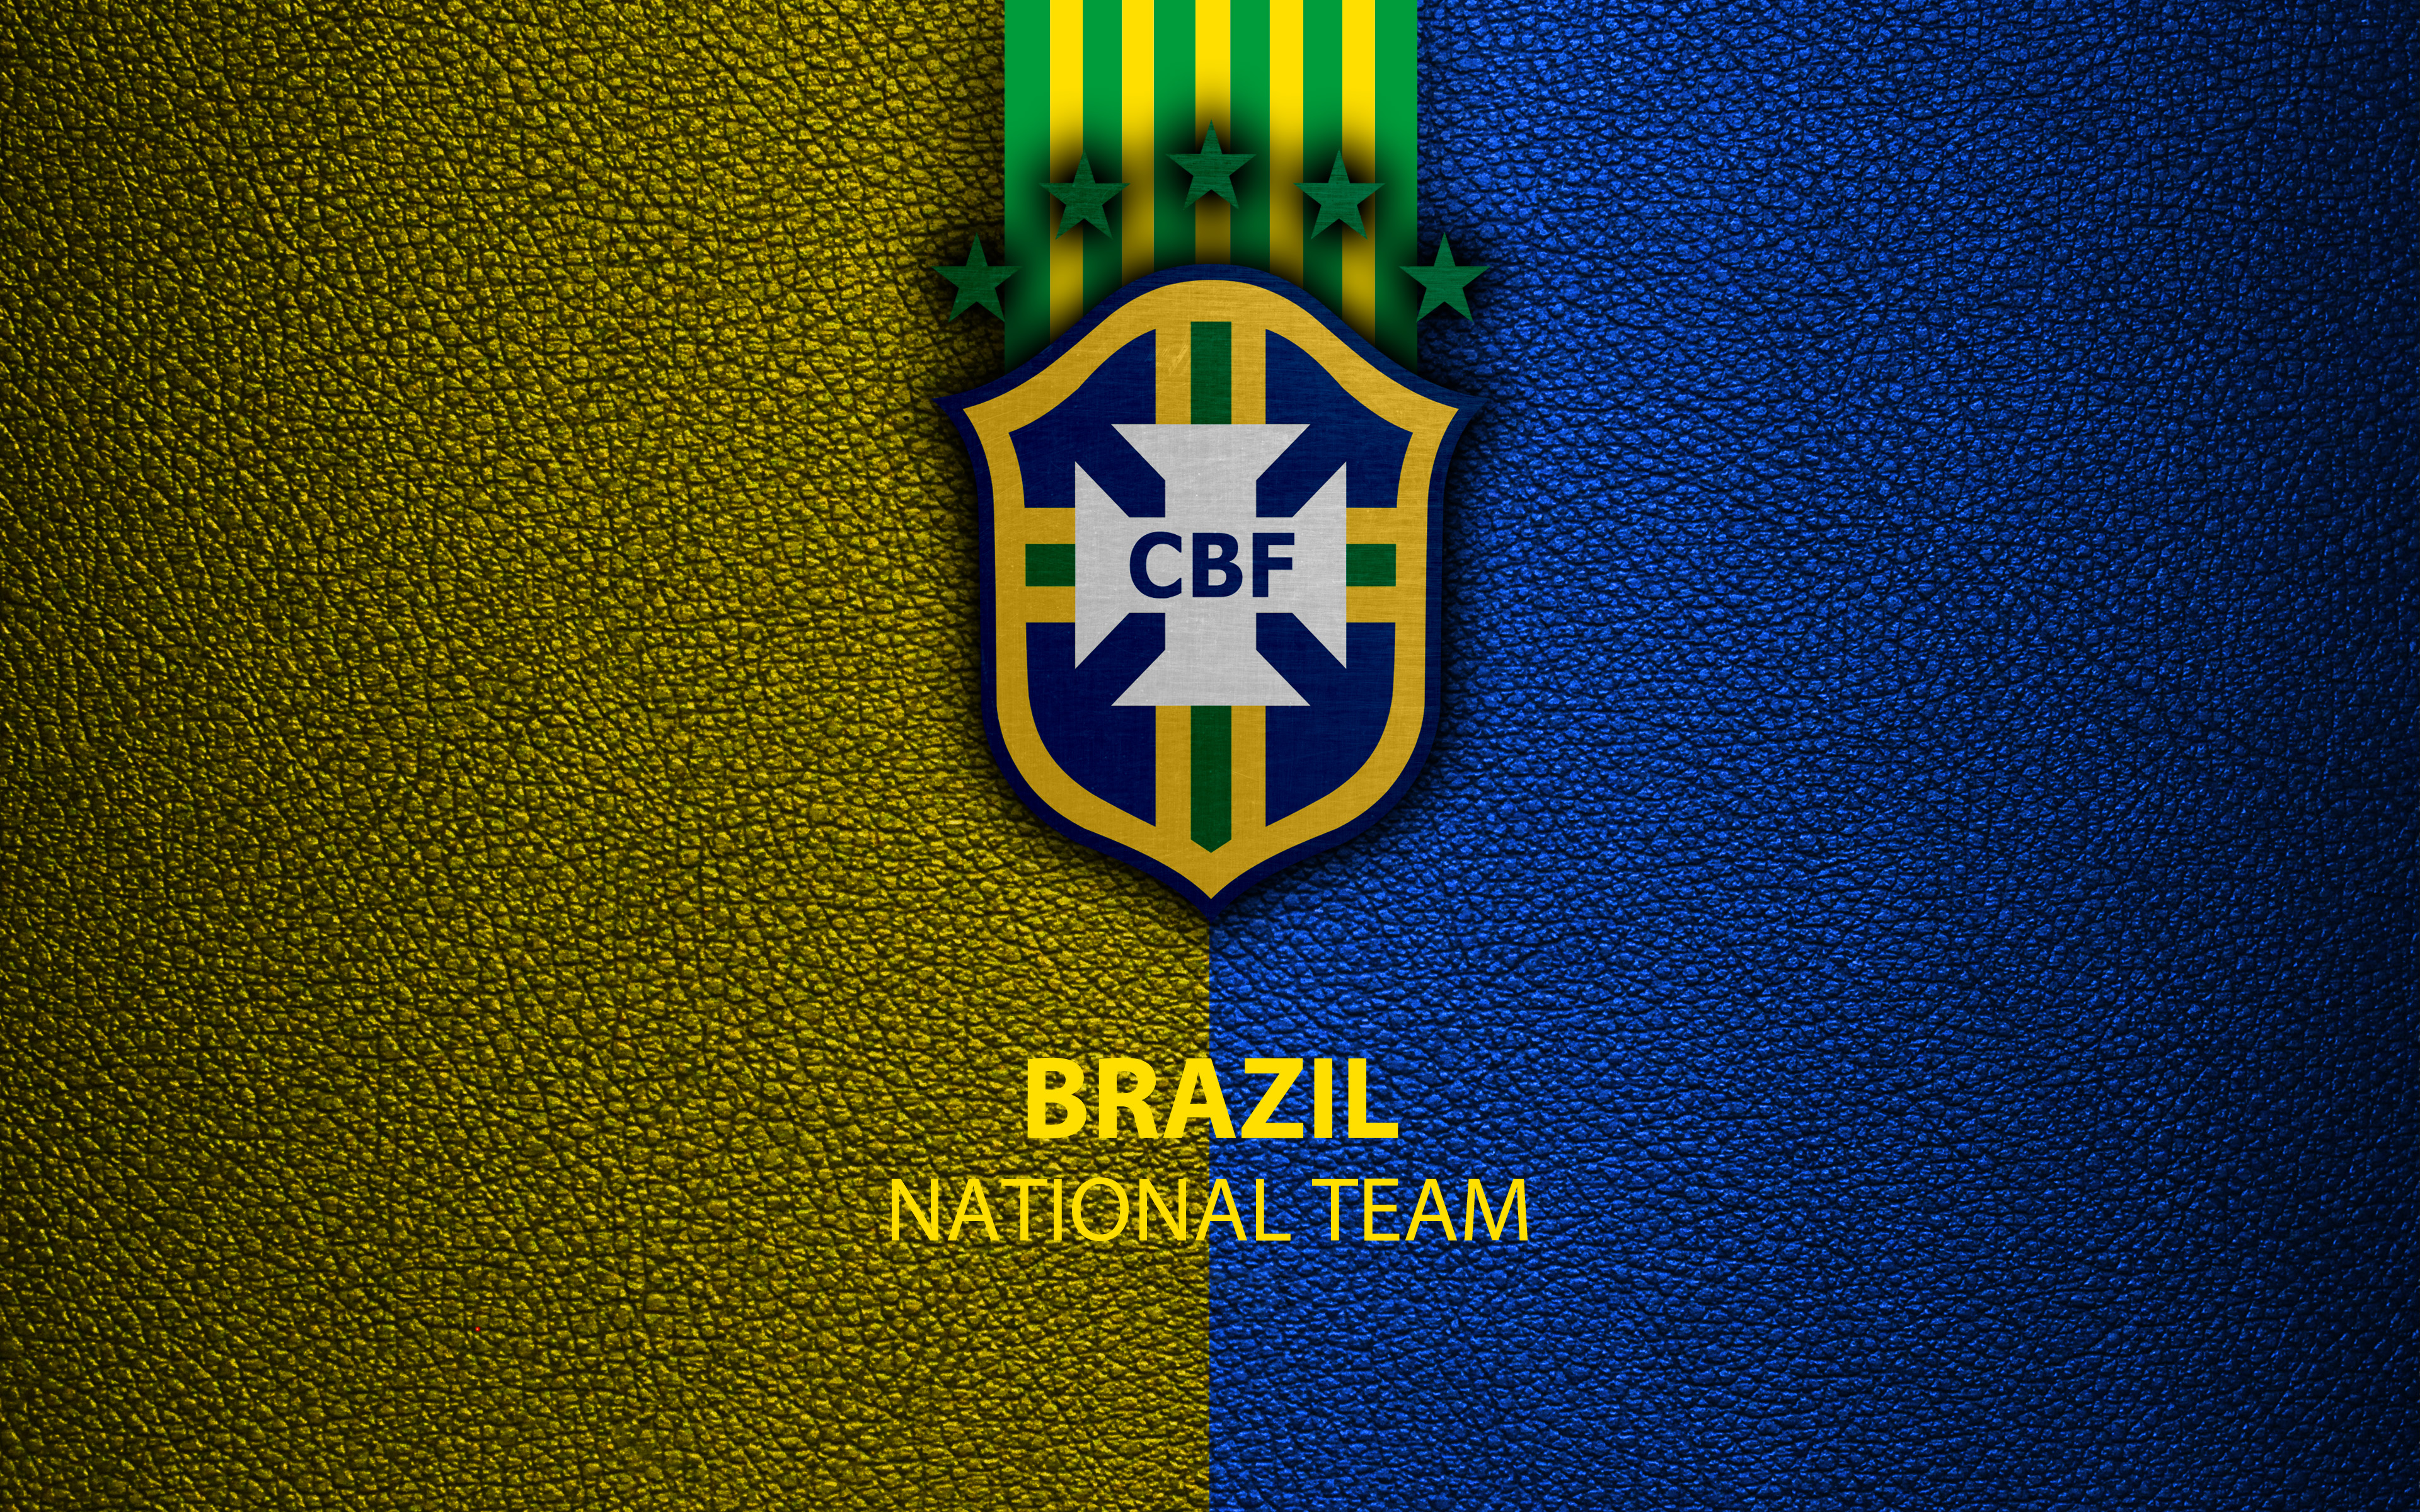 451317 descargar imagen deporte, selección de fútbol de brasil, brasil, emblema, logo, fútbol: fondos de pantalla y protectores de pantalla gratis